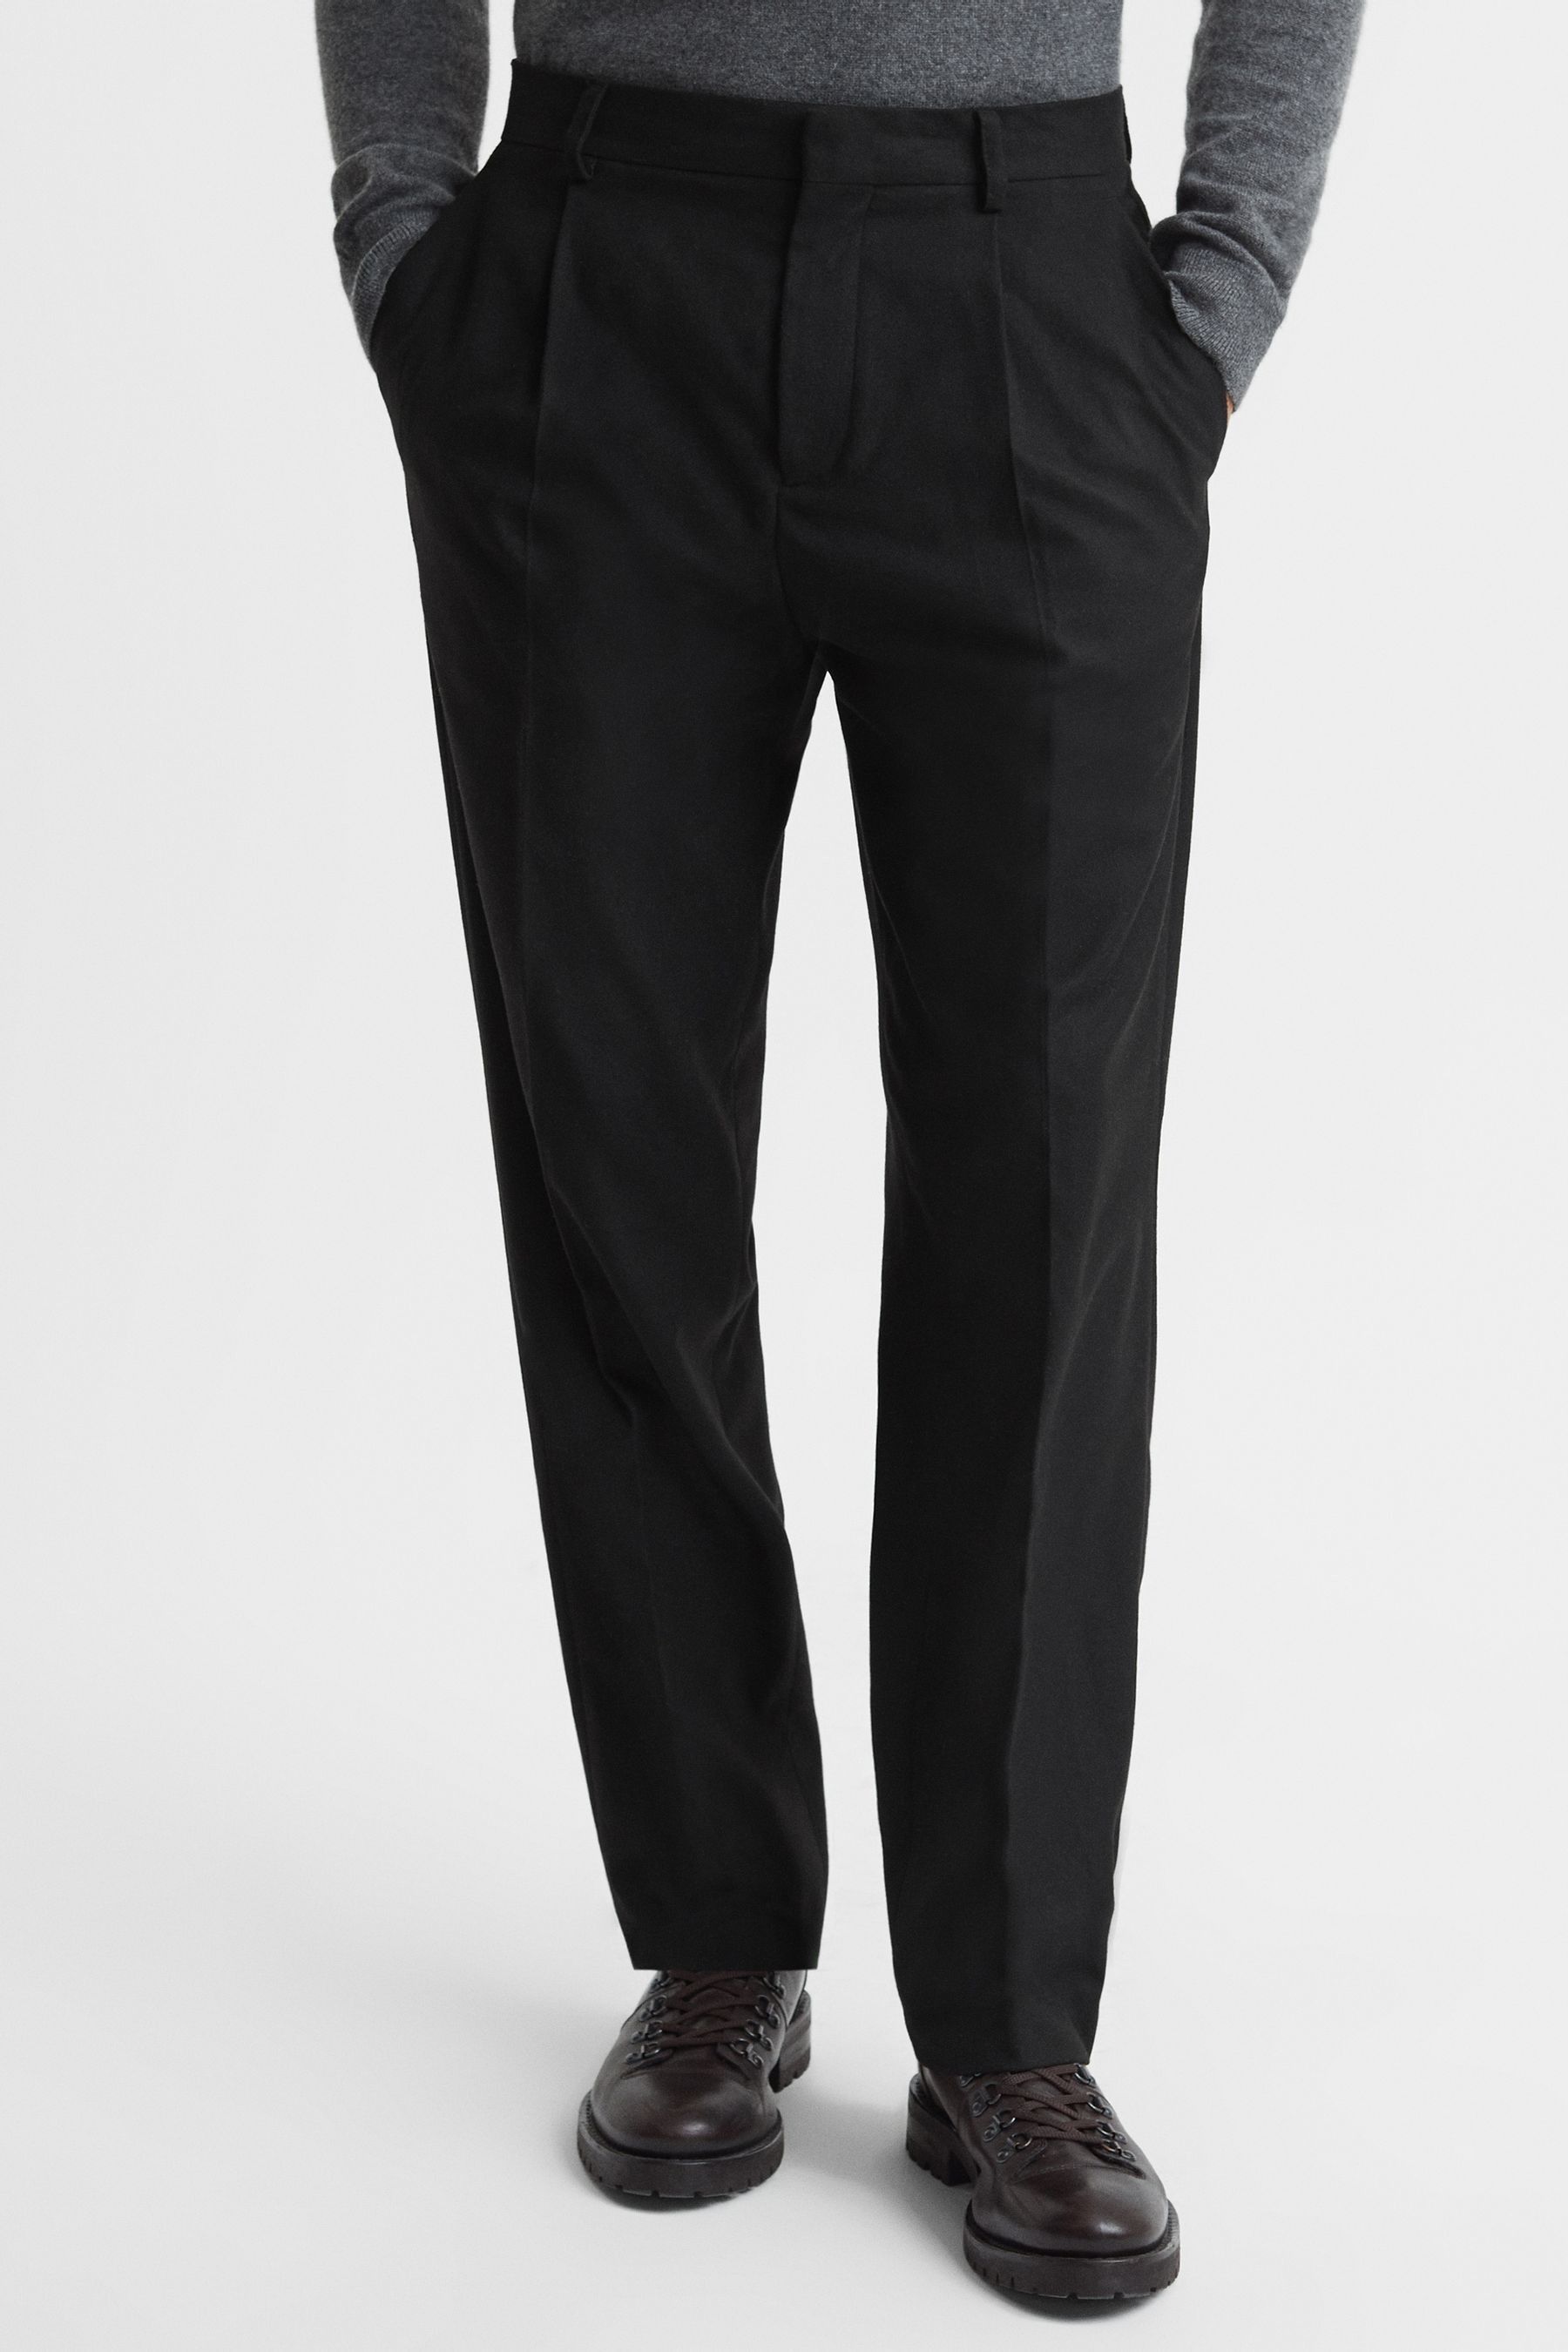 Reiss Lounge - Black Slim Fit Flannel Trousers, 36